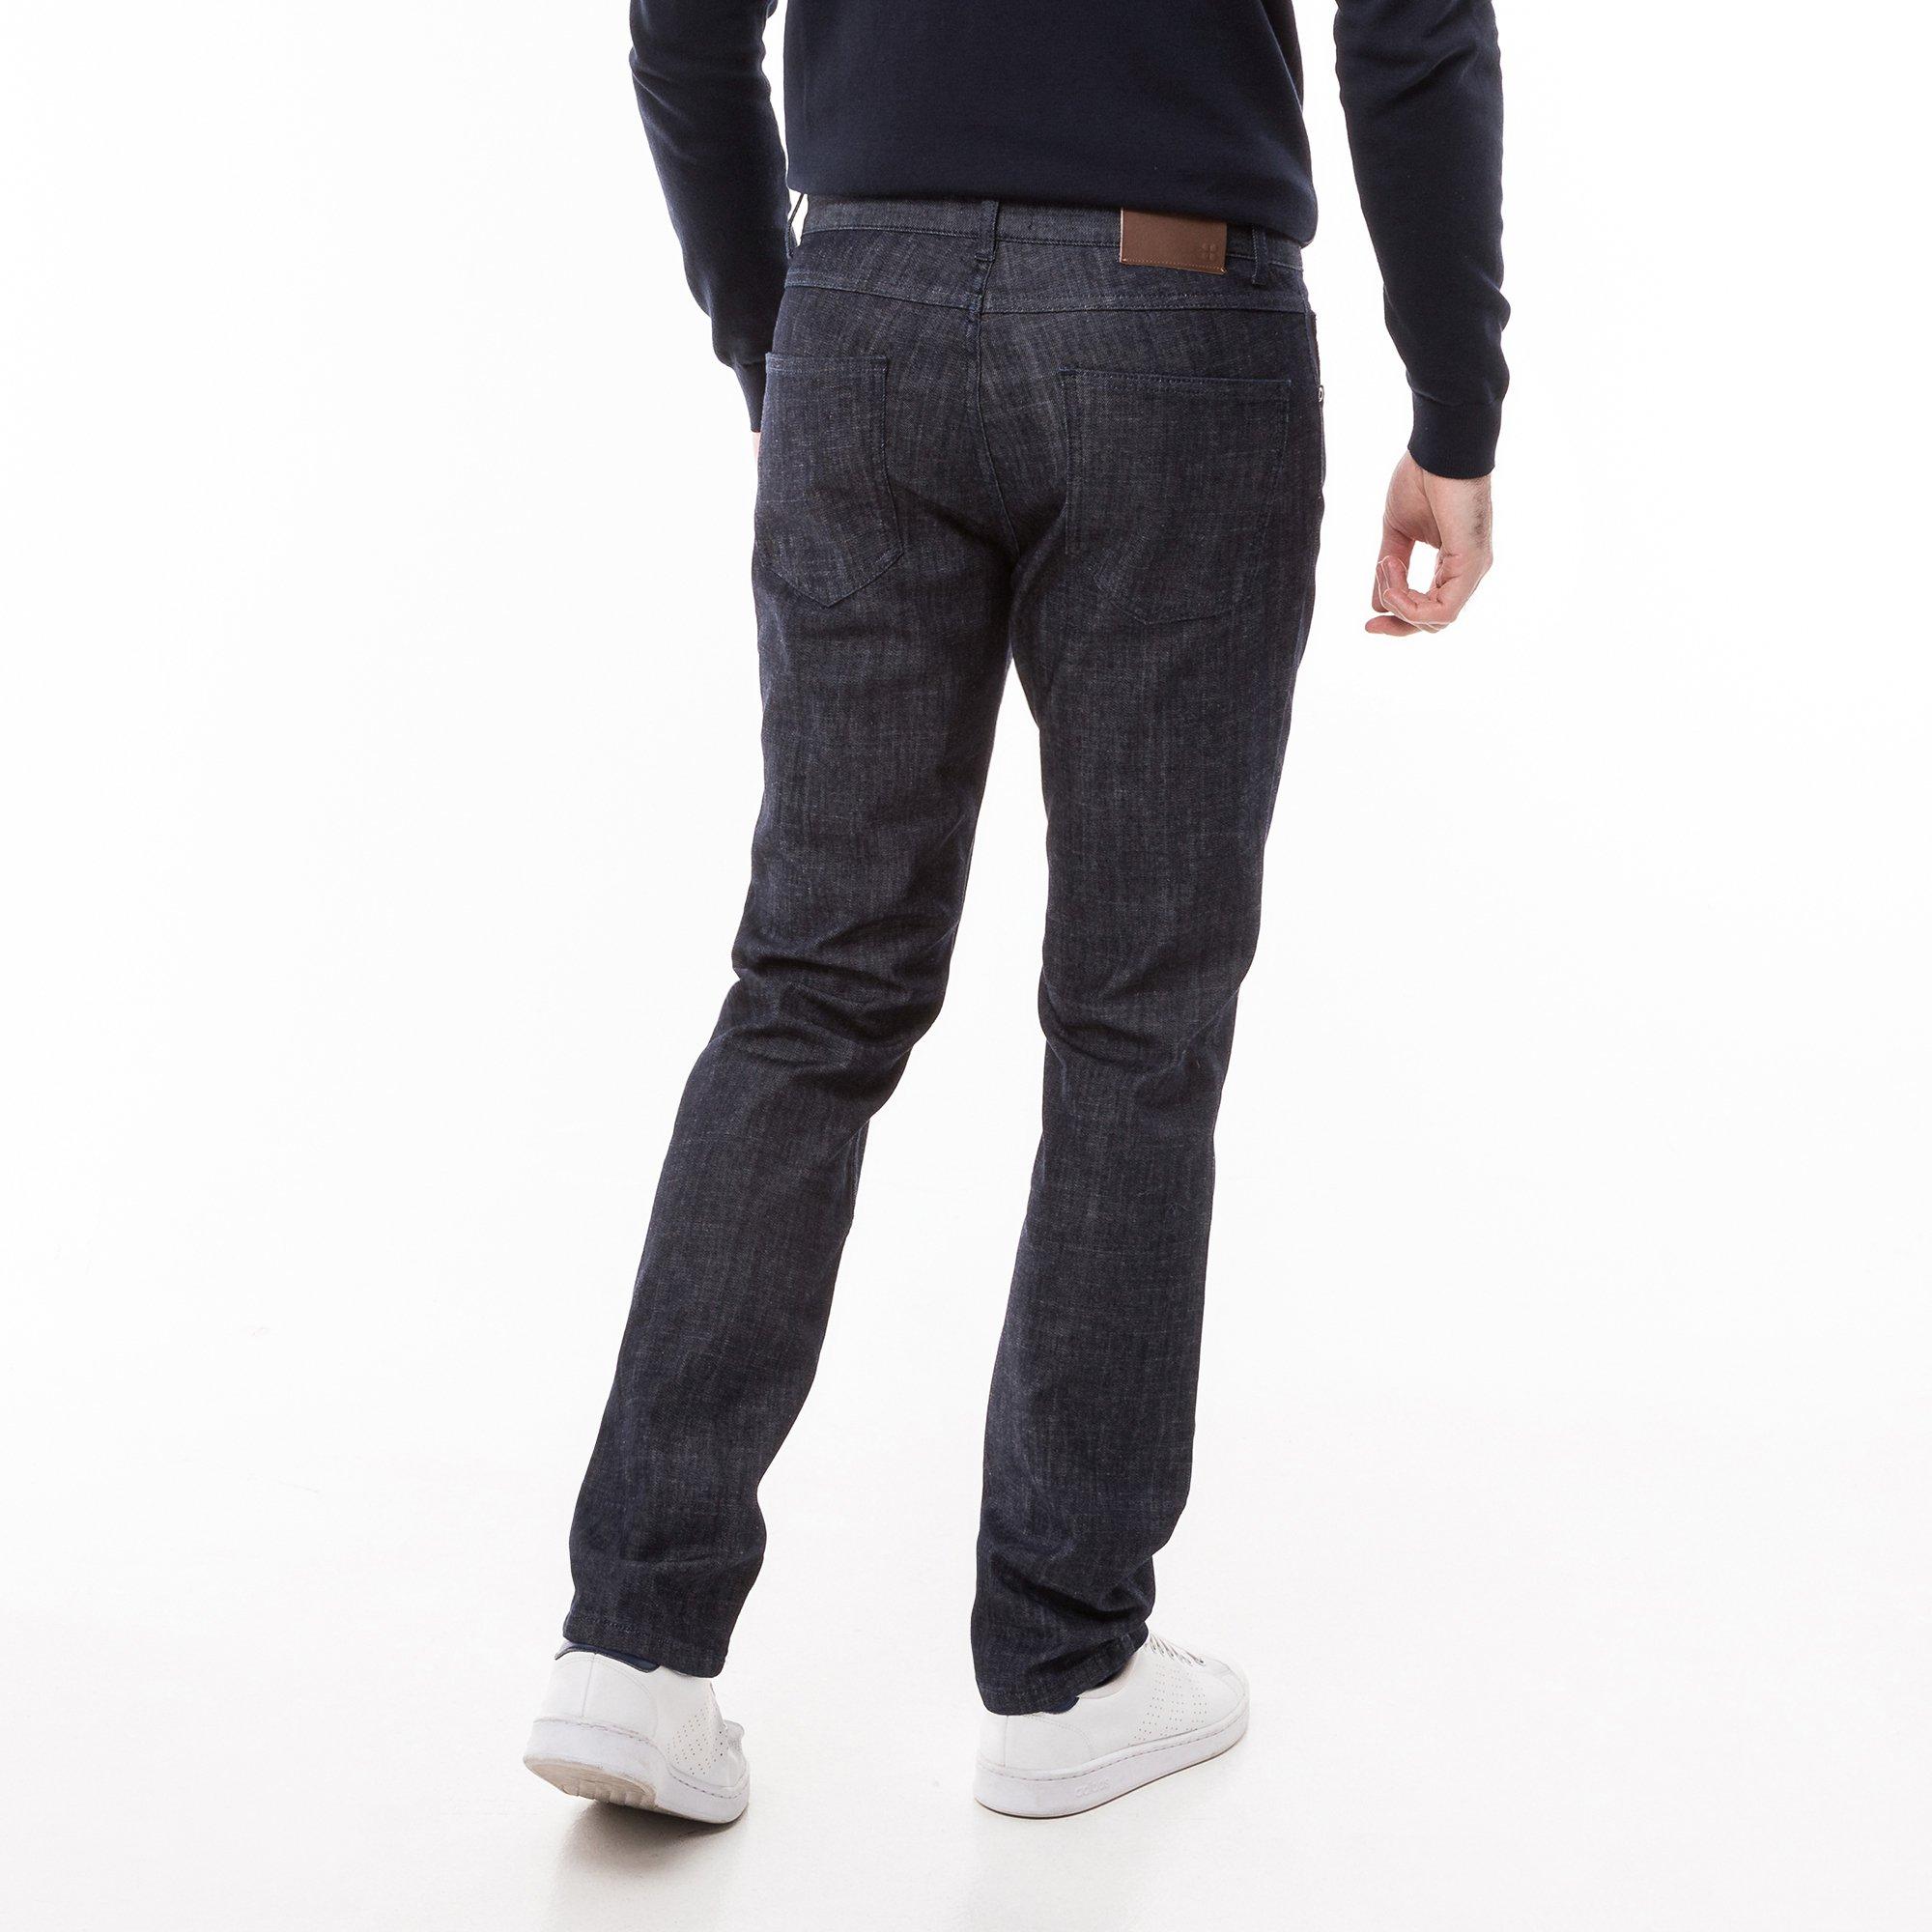 Manor Man Comfort Stretch Jeans, regular fit 